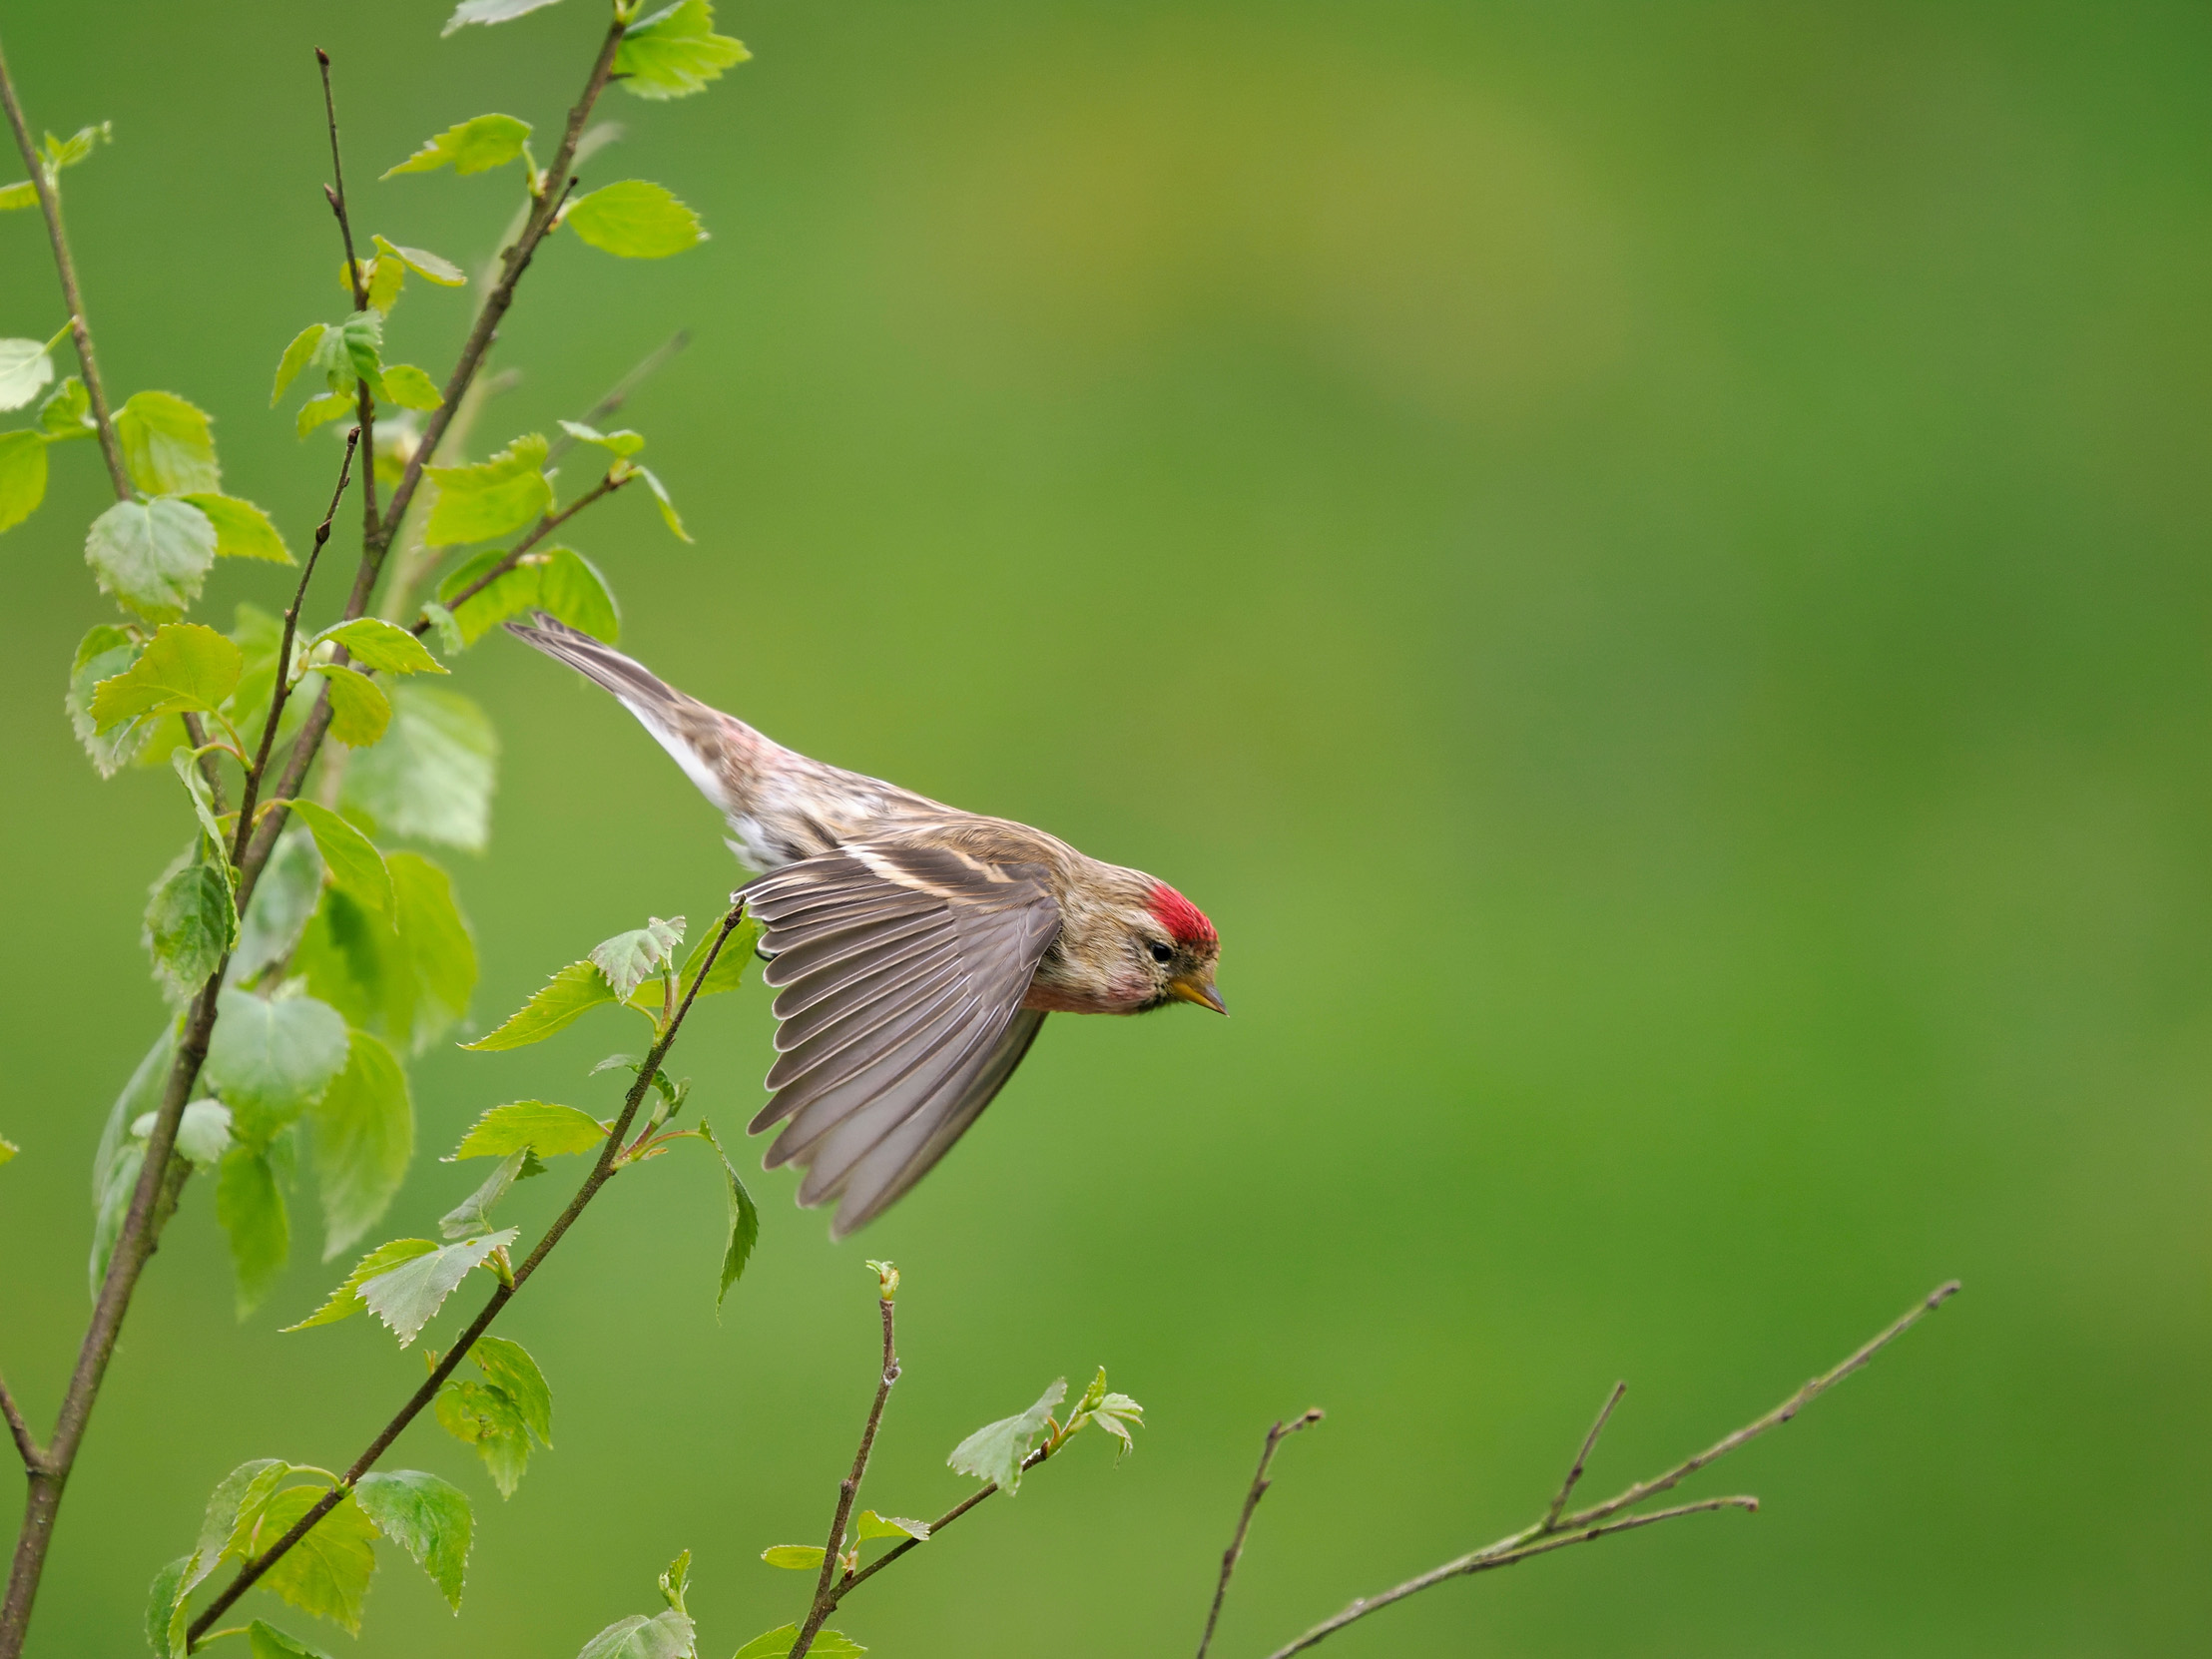 Lesser Redpoll in flight from a tree.